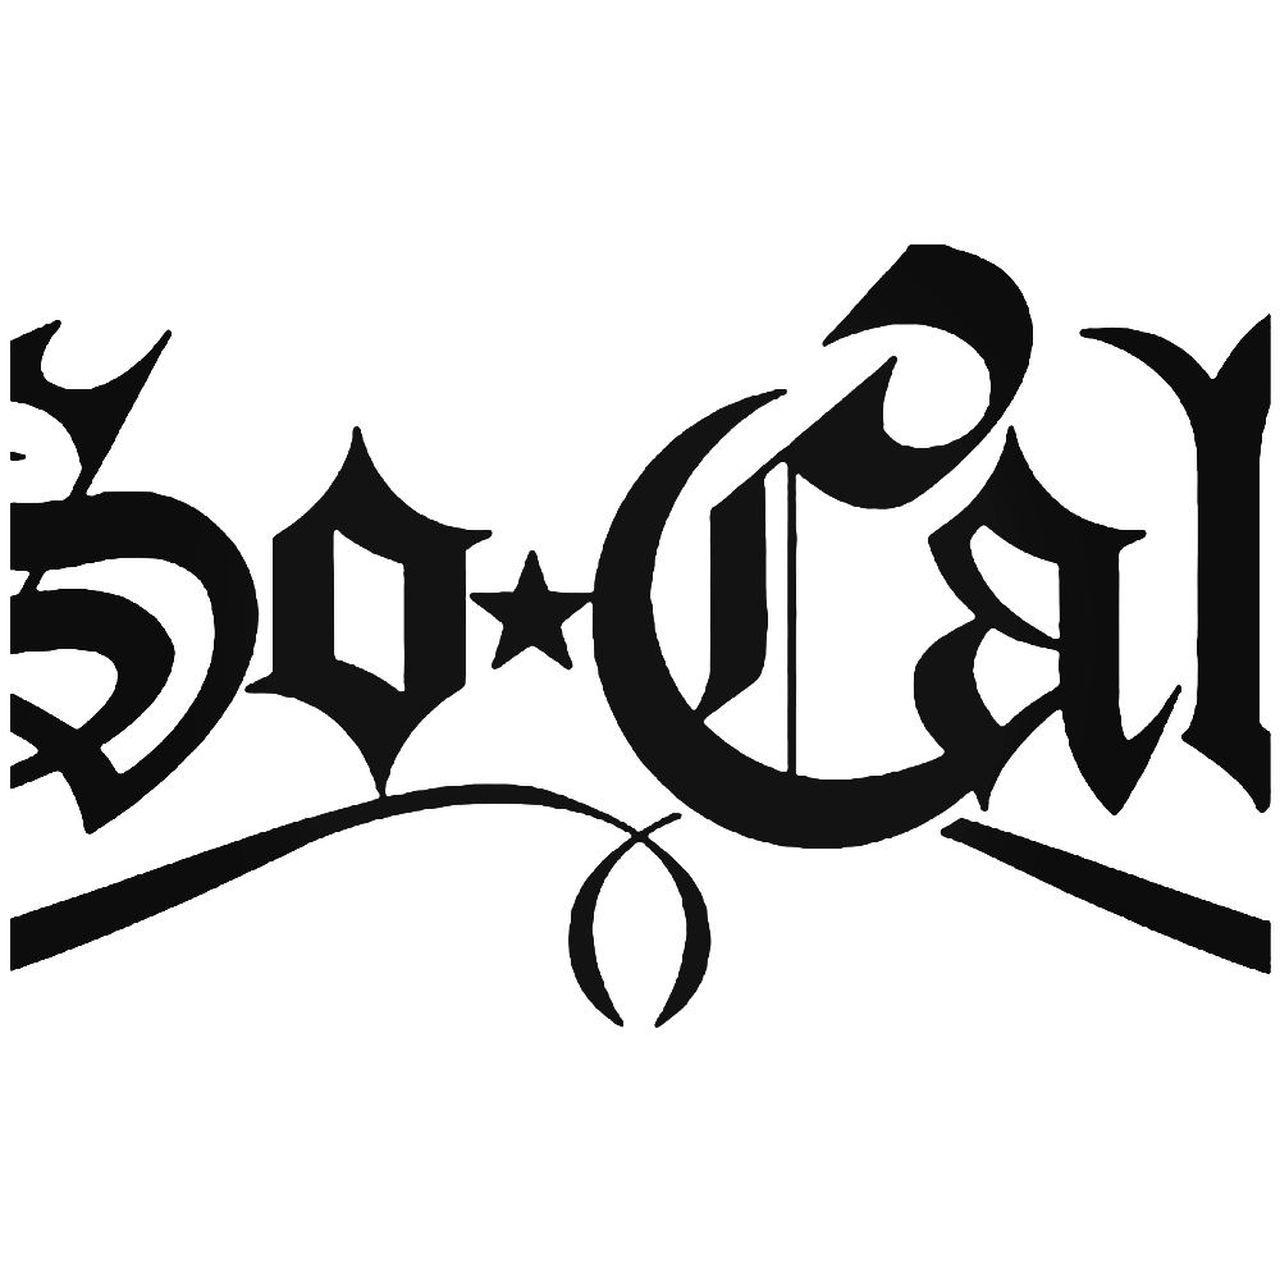 SoCal Logo - Socal Logo 2 Vinyl Decal Sticker